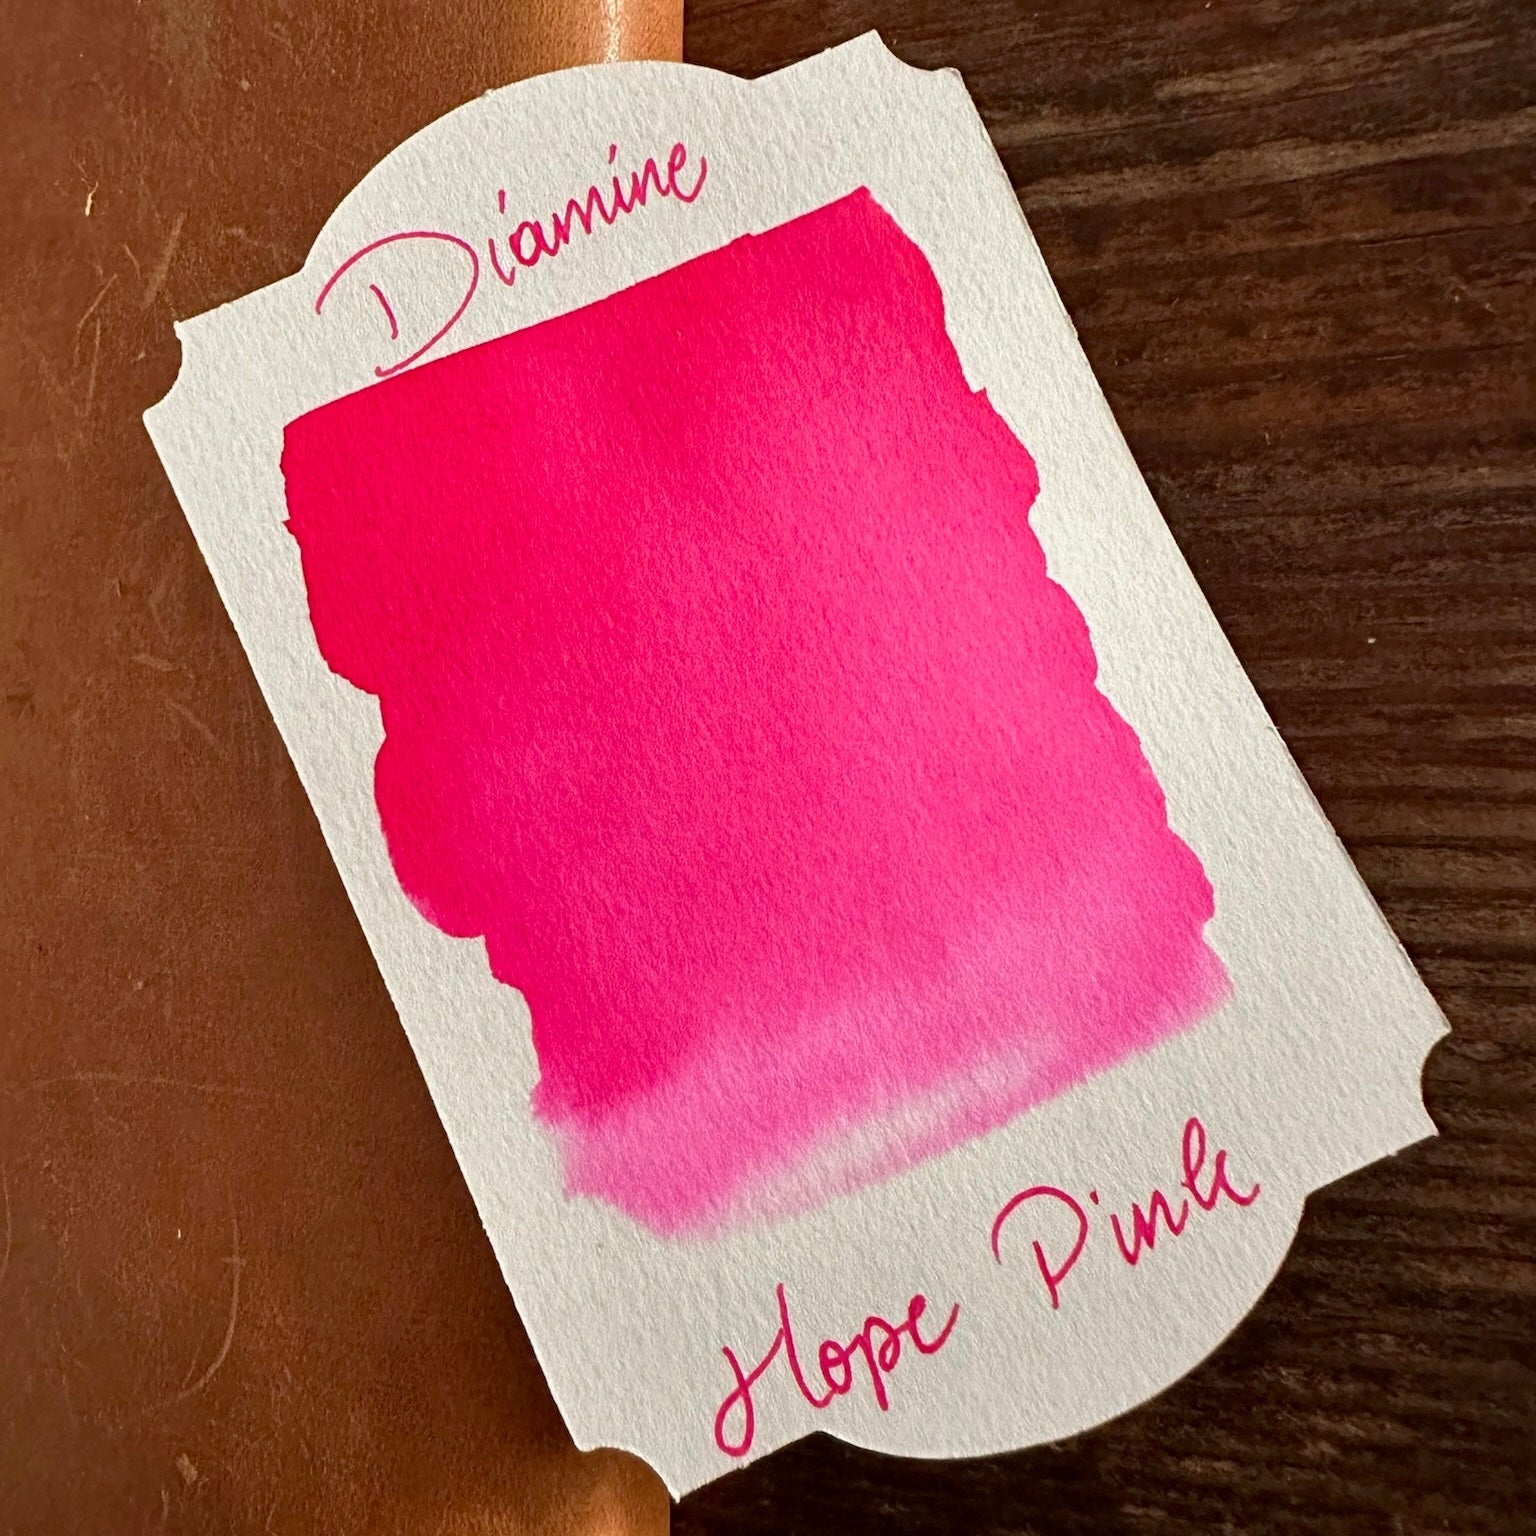 Diamine Hope Pink